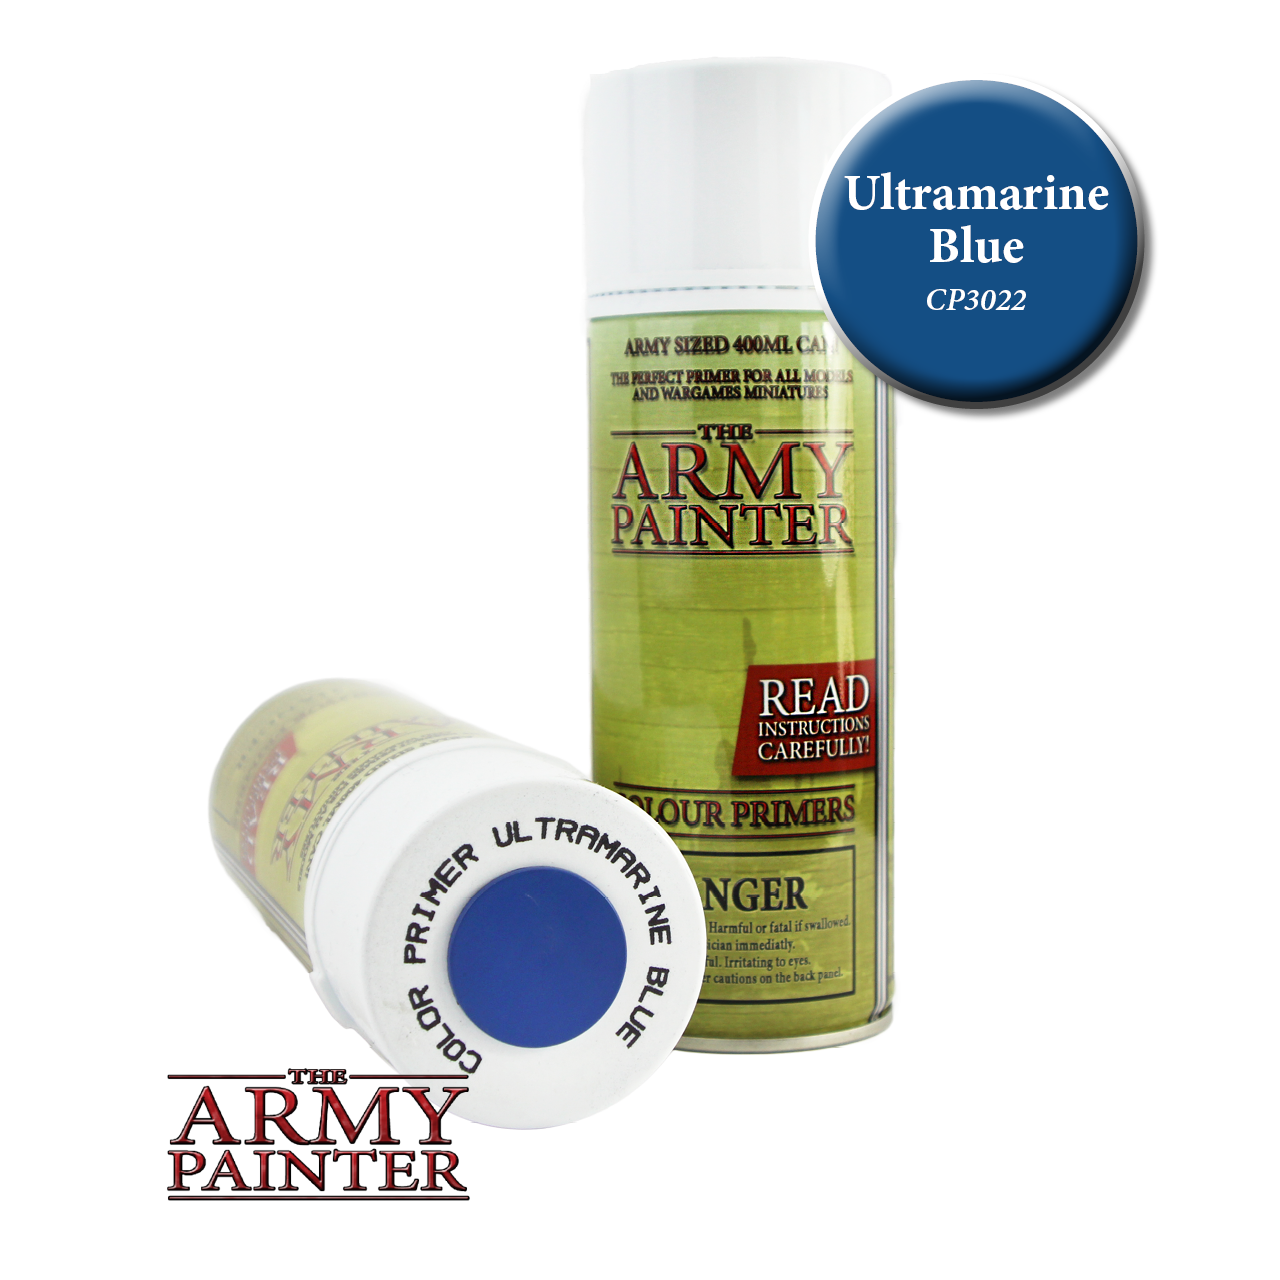 The Army Painter Ultramarine Blue Spray